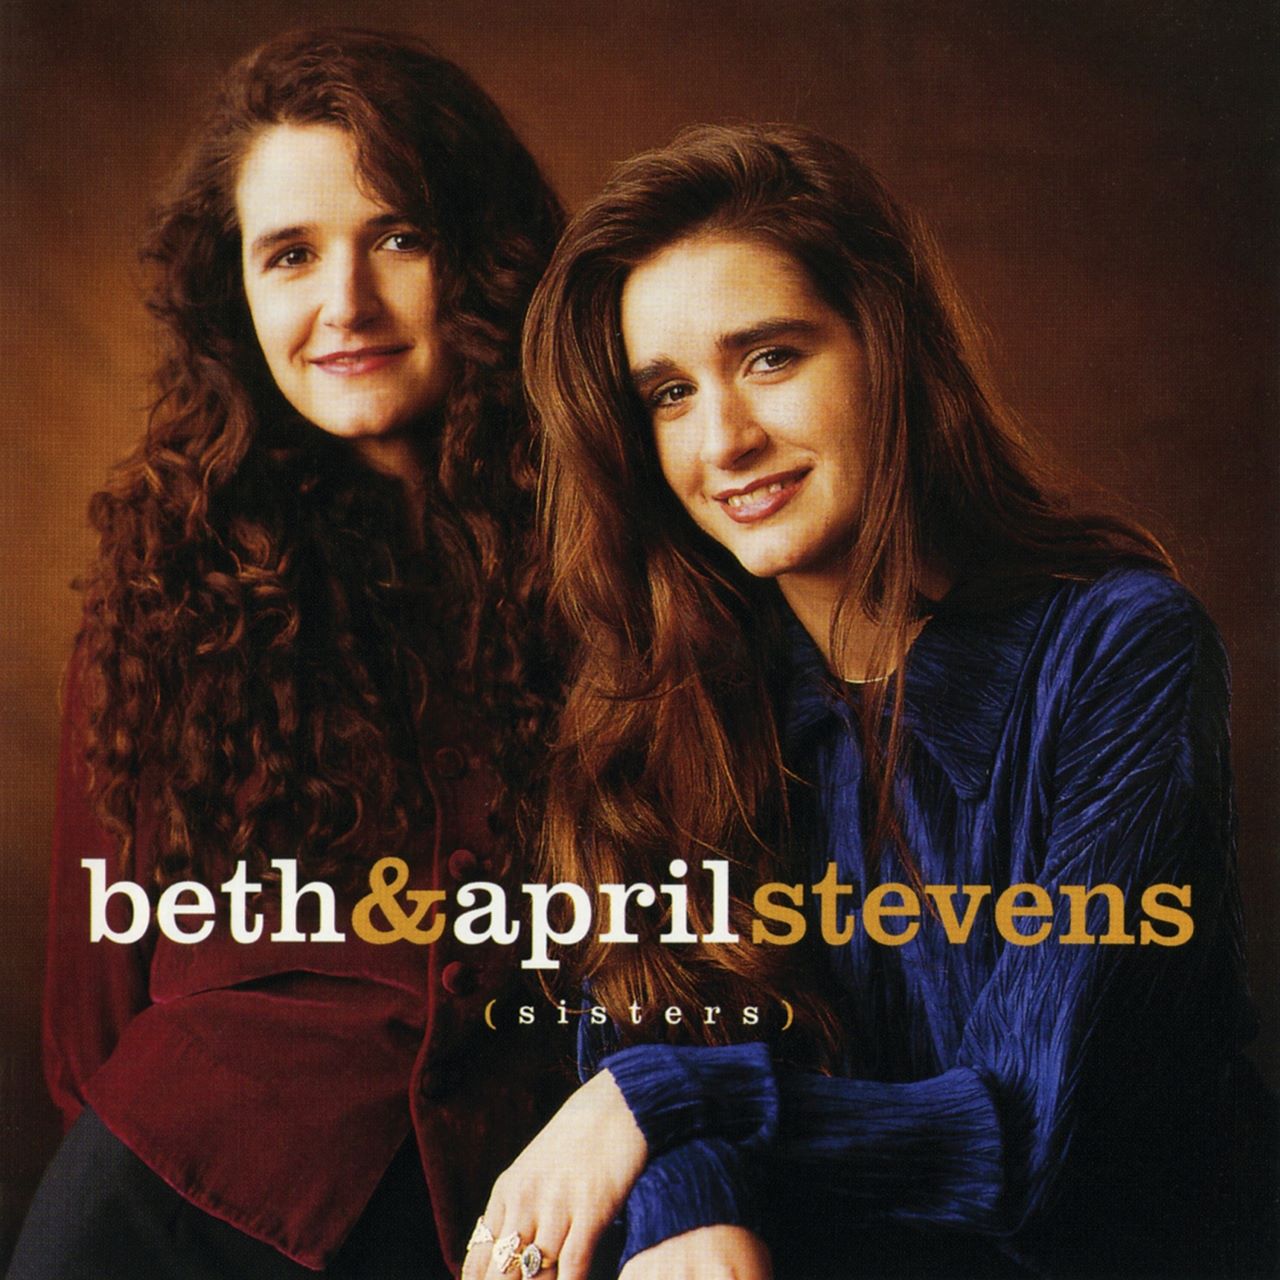 Beth & April Stevens – “Sisters” cover album